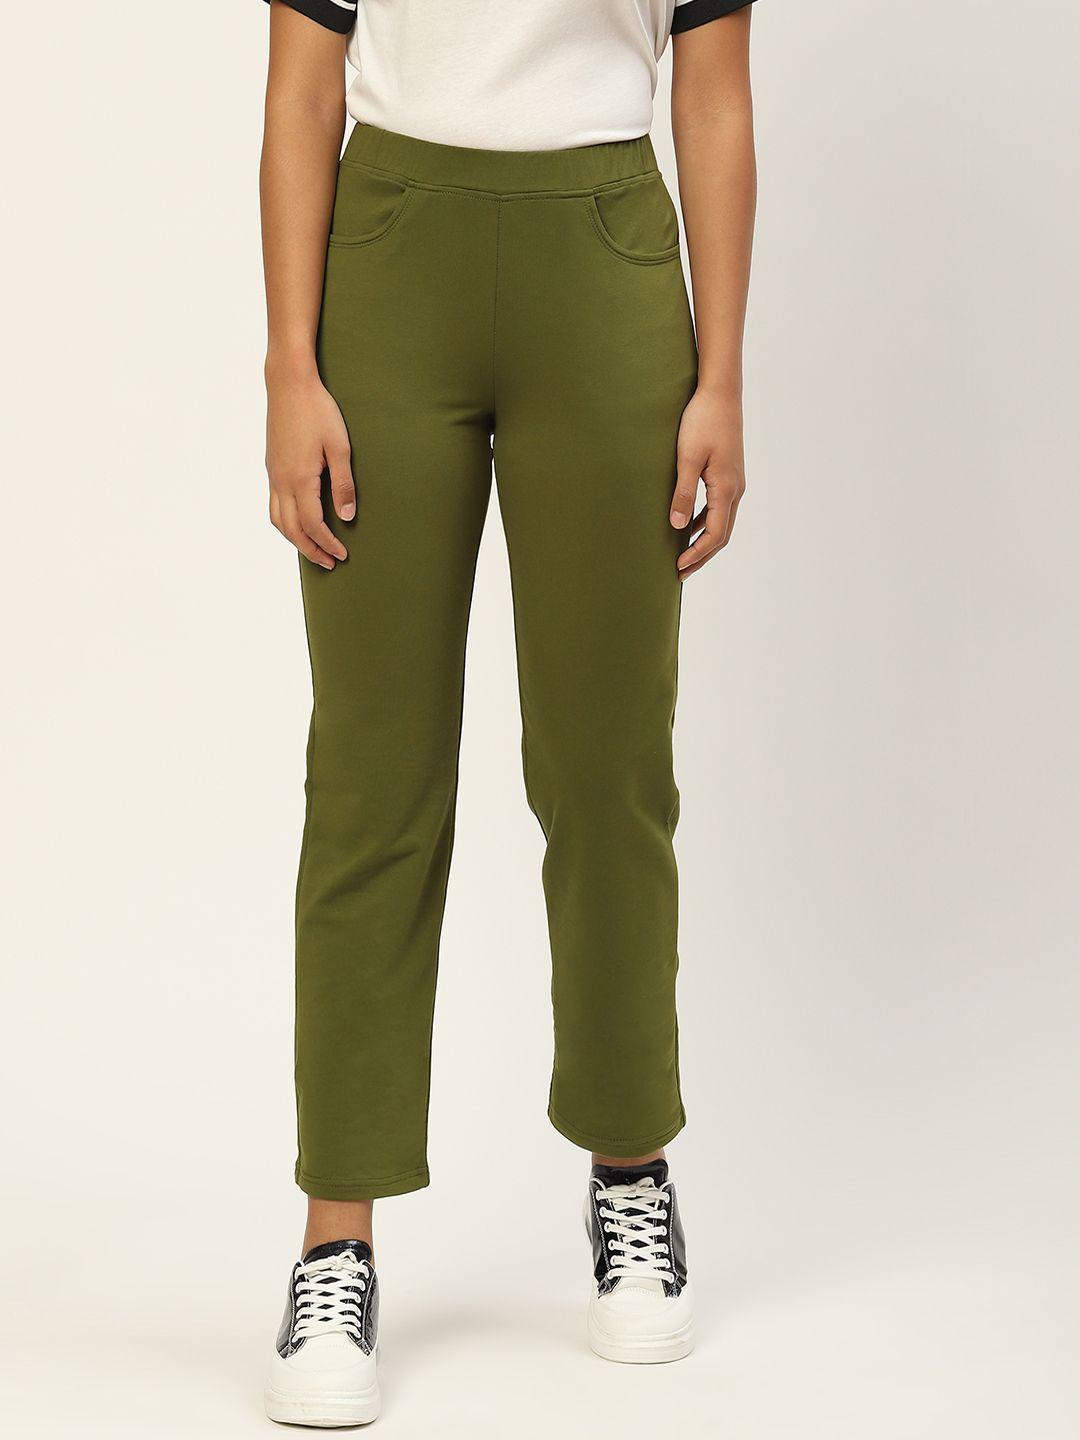 brinns women olive green smart trousers